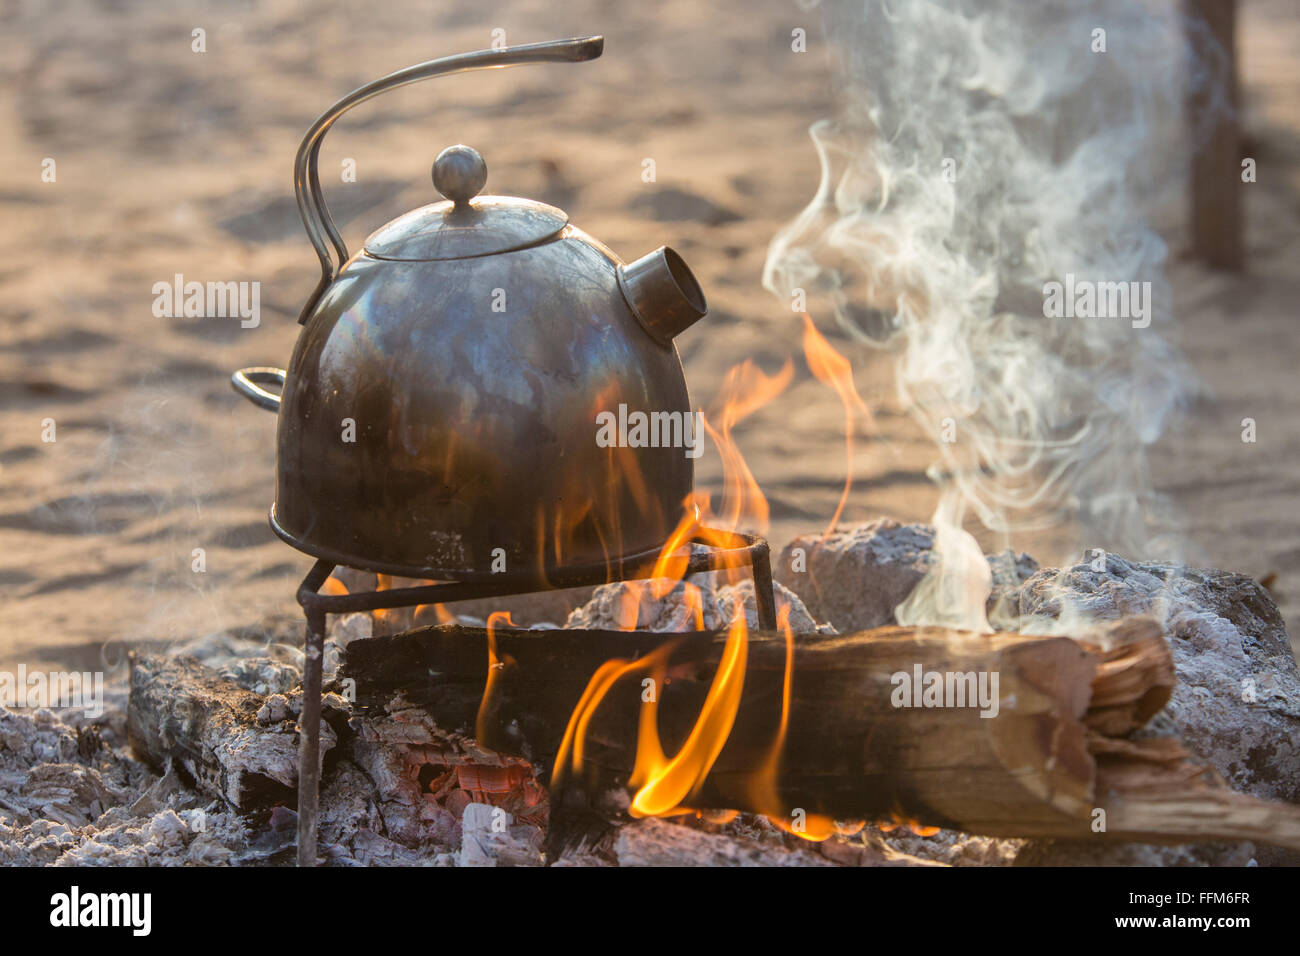 https://c8.alamy.com/comp/FFM6FR/kettle-boiling-on-a-campfire-FFM6FR.jpg